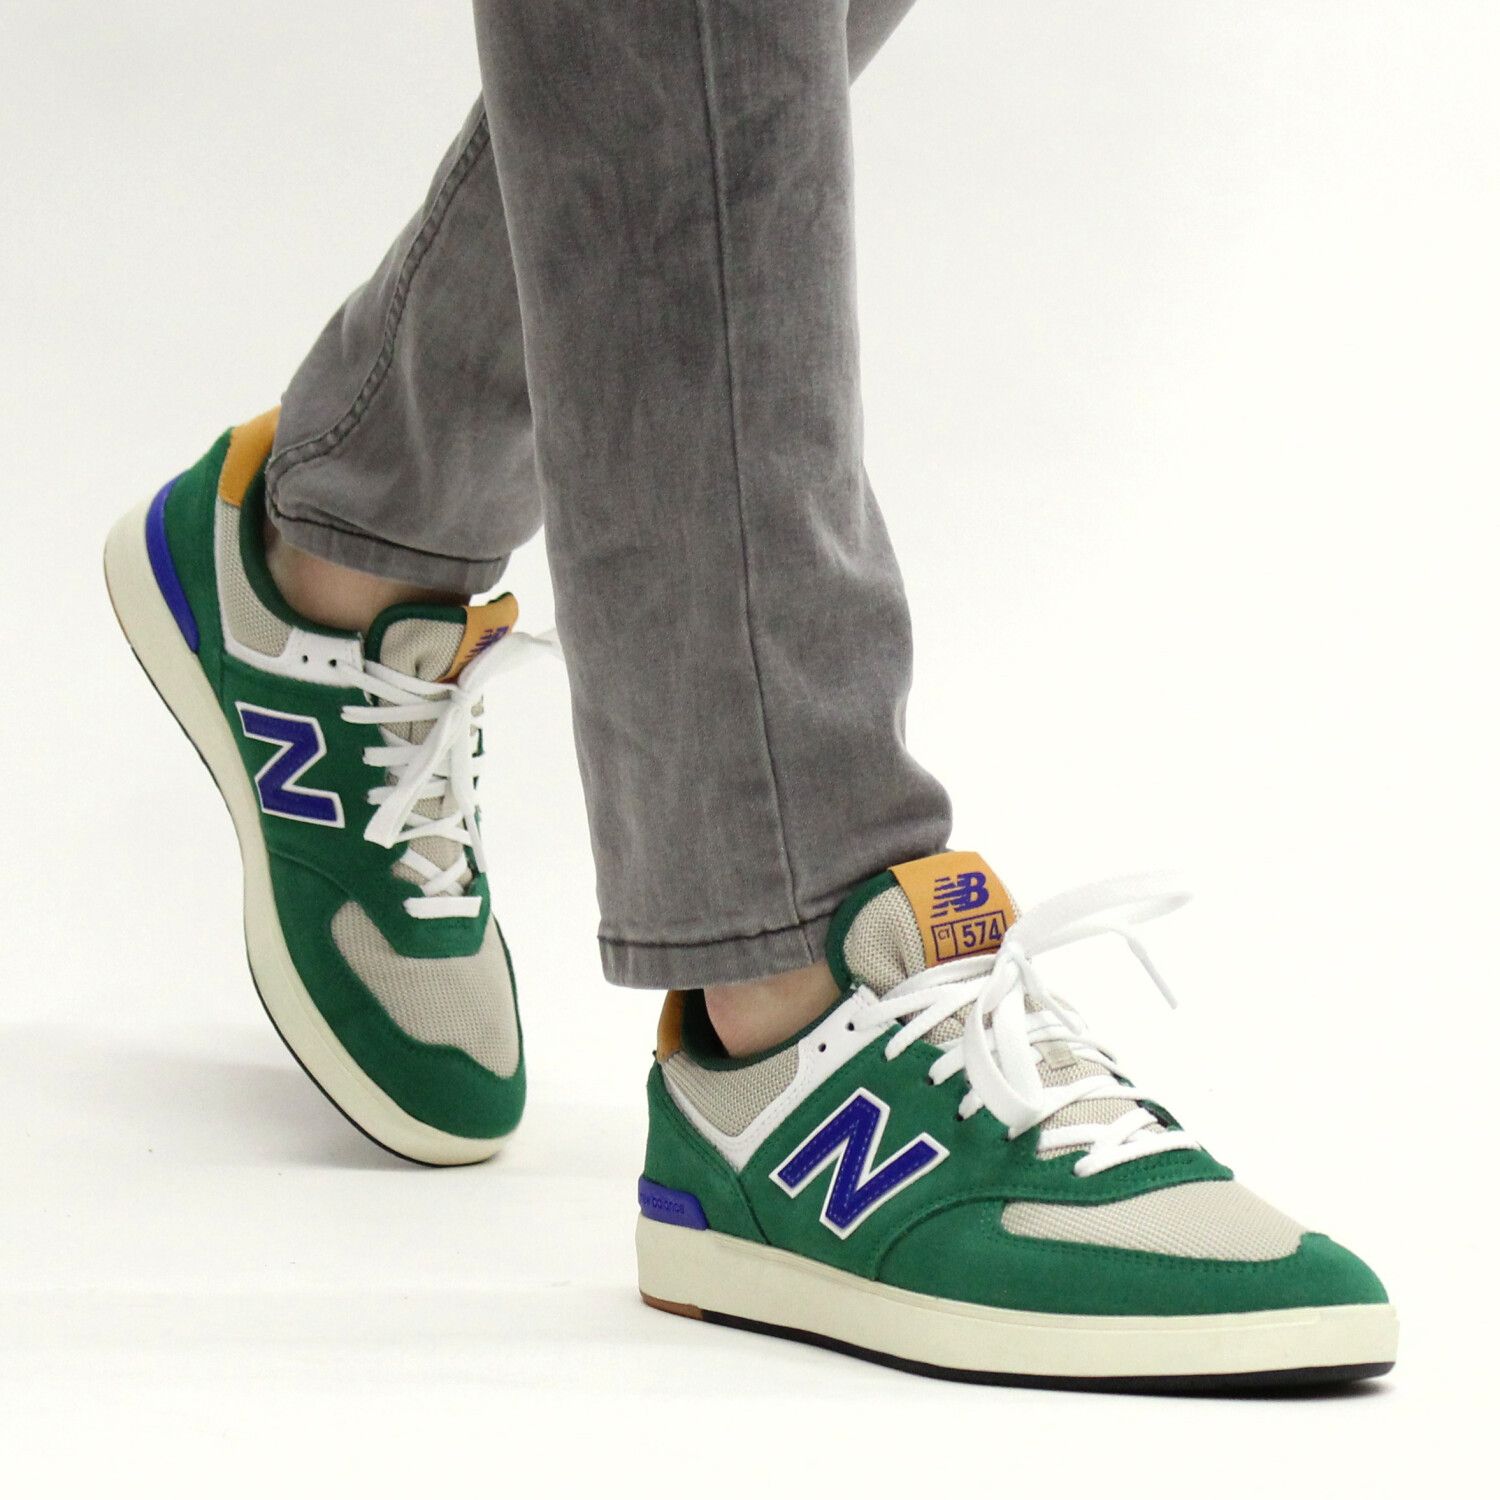 New Balance Sneaker Heren Groen